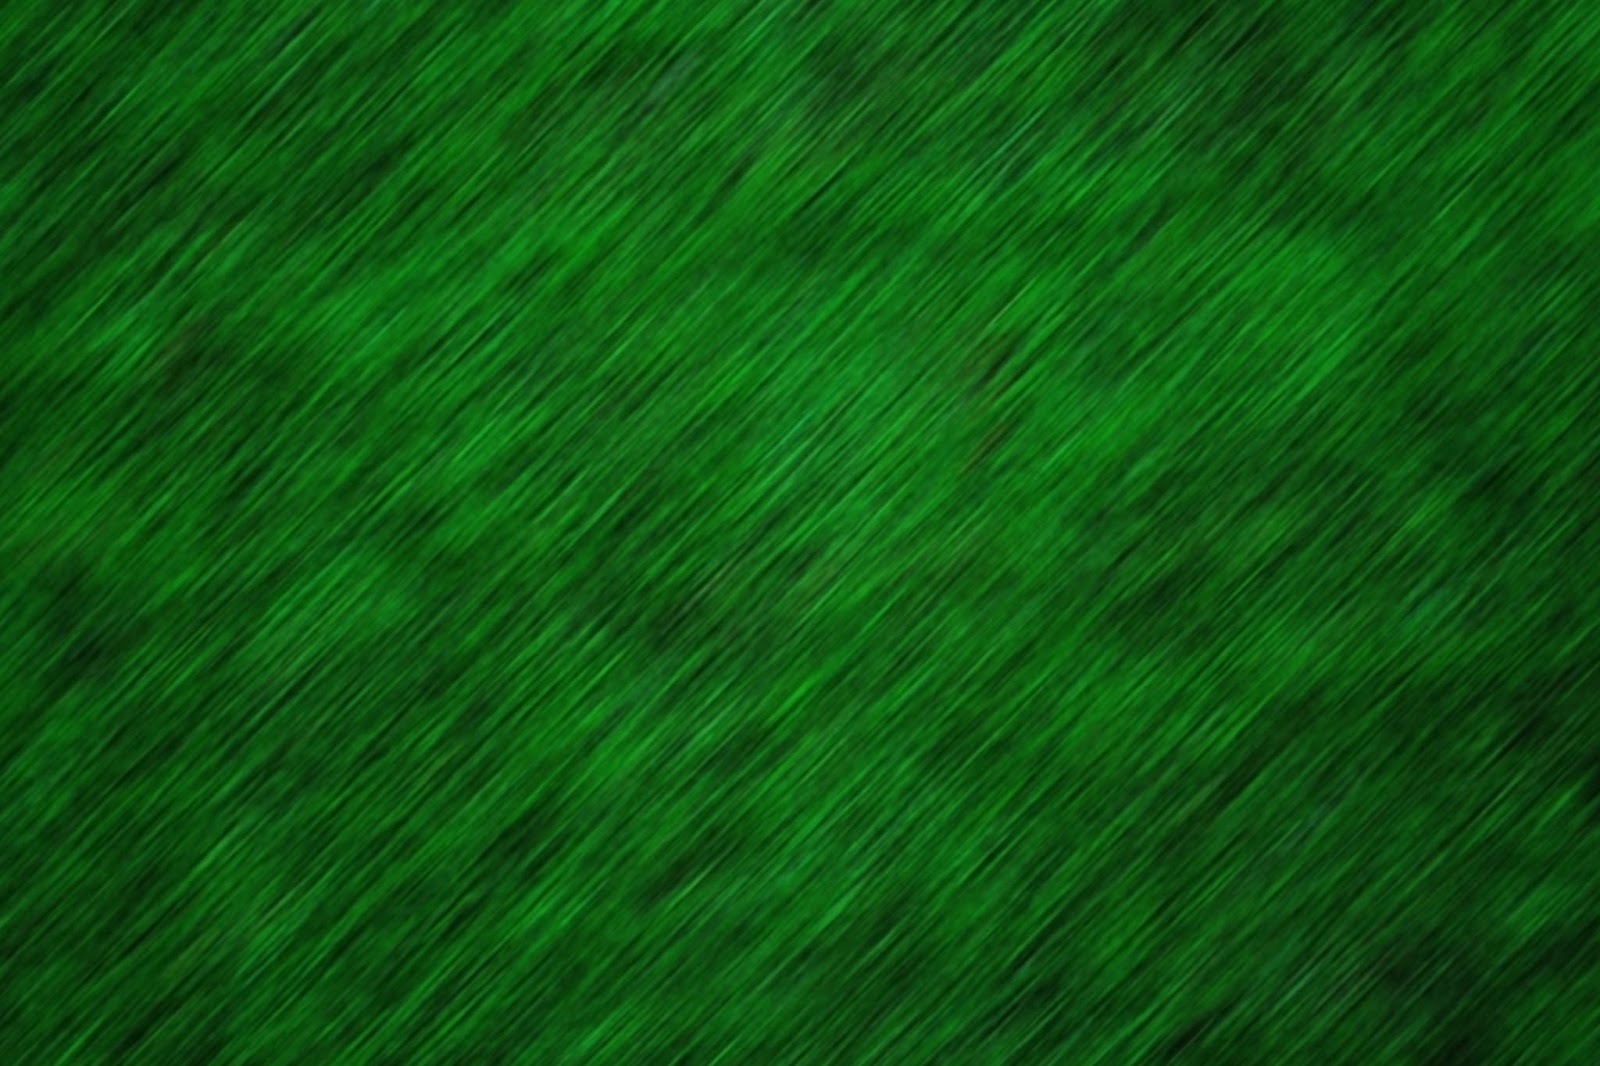 wallpaper hijau,green,grass,leaf,grass family,artificial turf